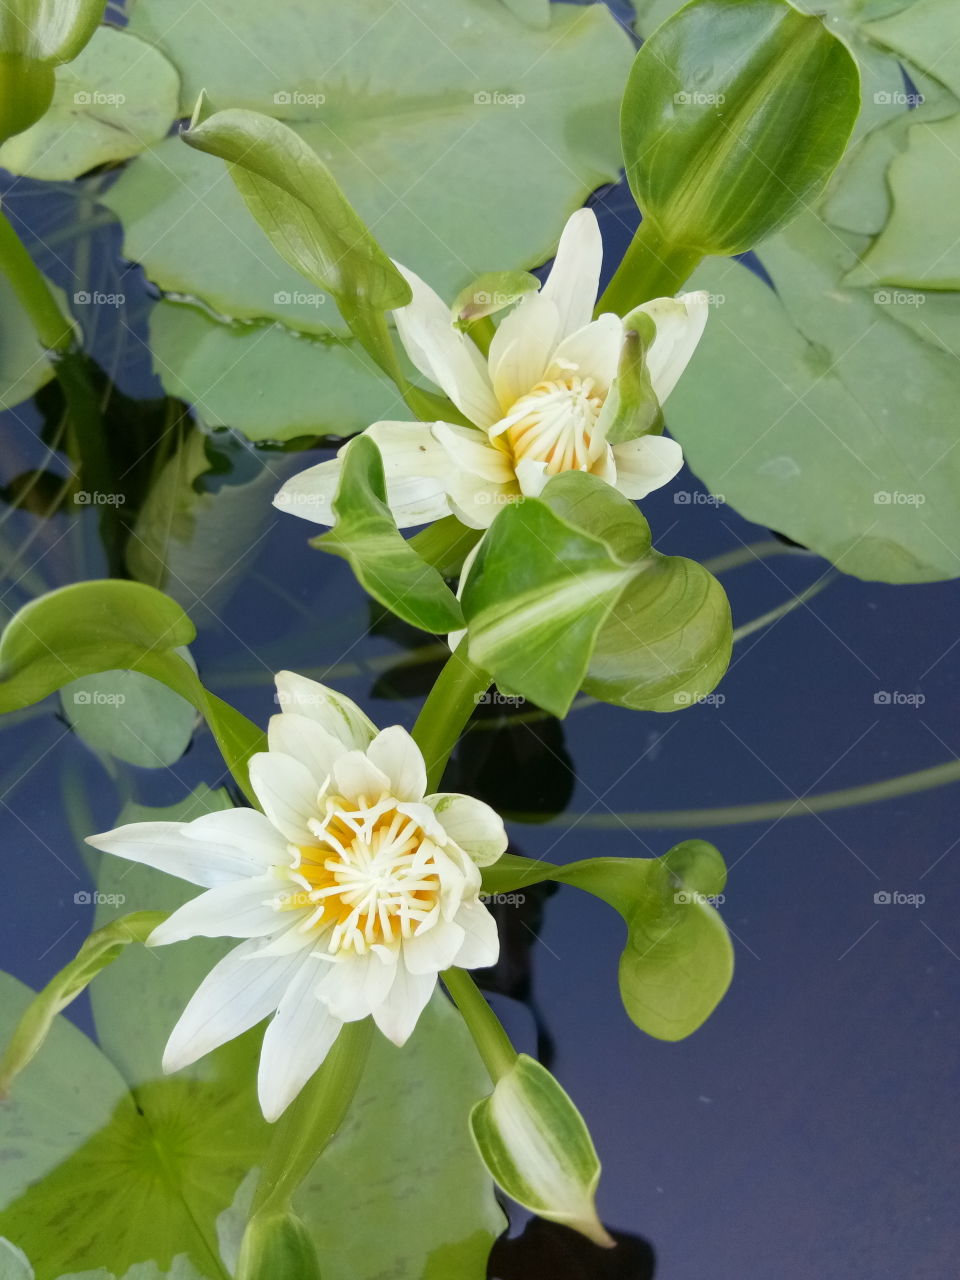 Lotus : Flower at king rama 9 :National park of thailand.Beautiful.